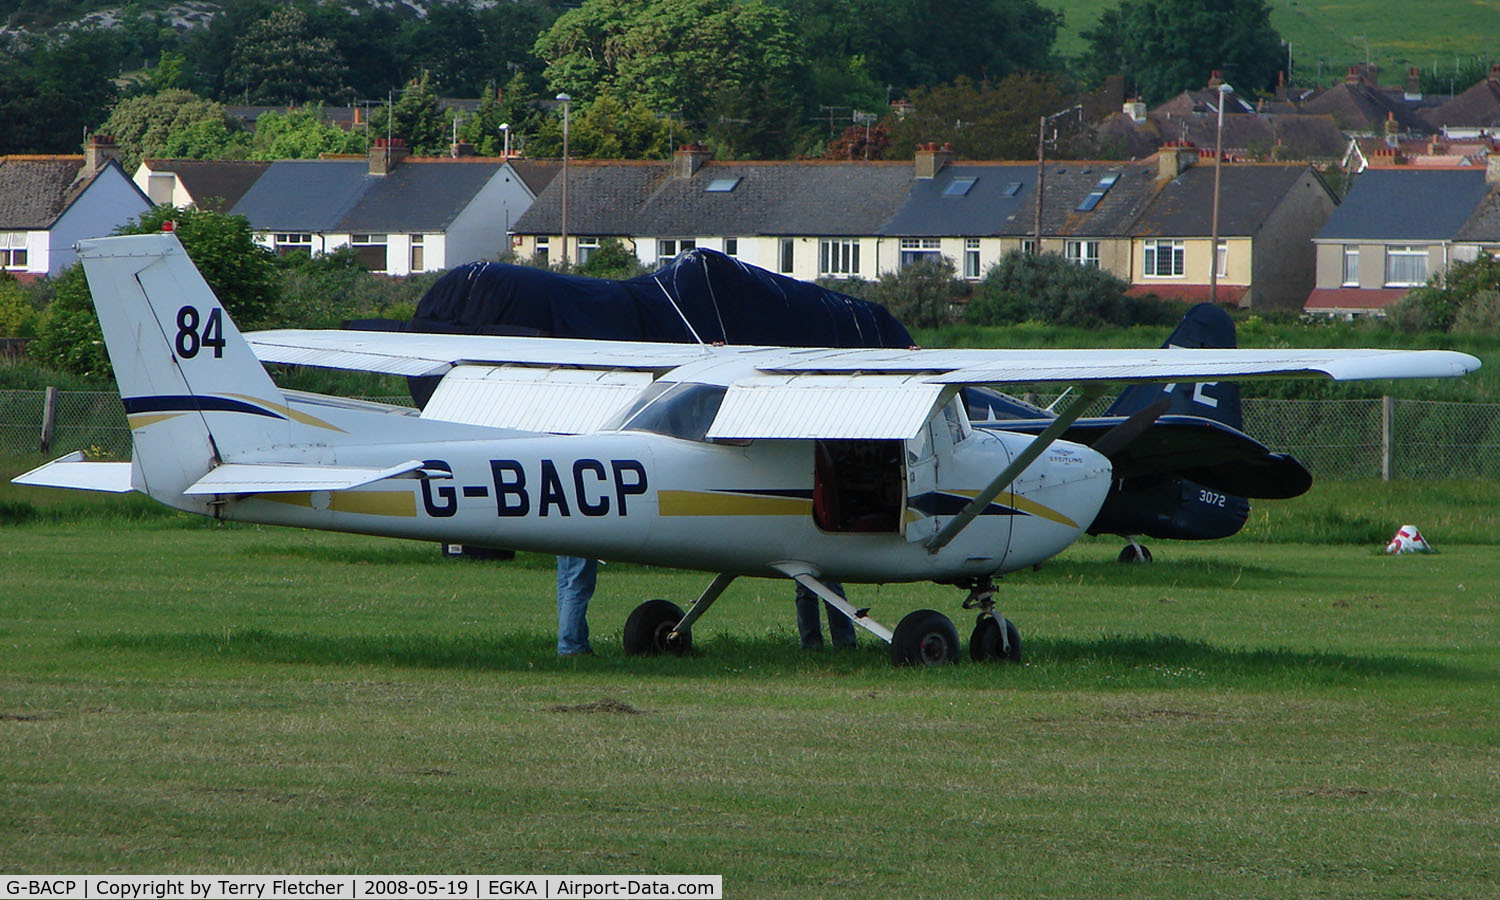 G-BACP, 1972 Reims FRA150L Aerobat C/N 0164, A pleasant May evening at Shoreham Airport , Sussex , UK